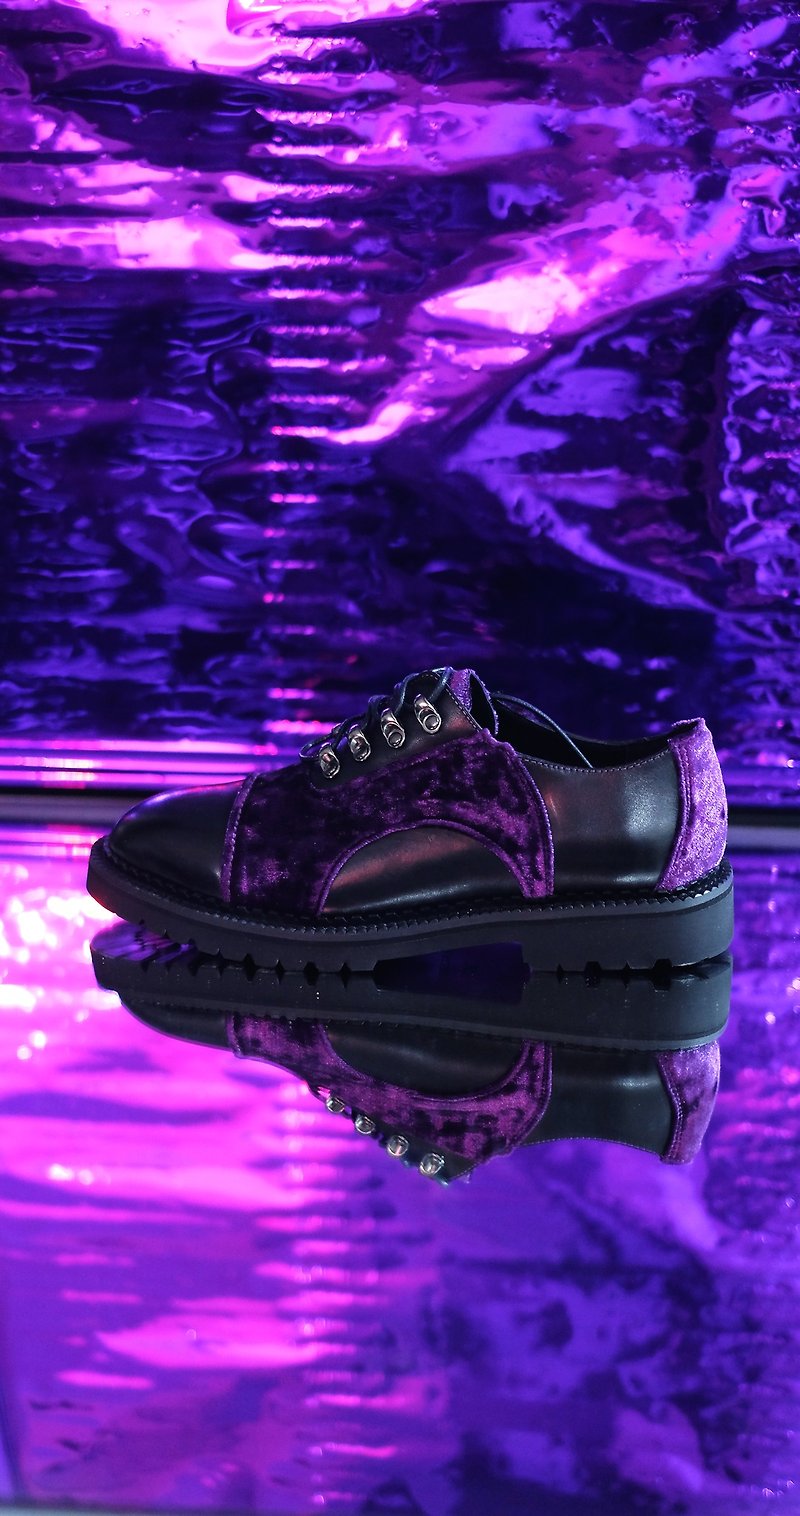 Purple Velvet lady shoes. - 女休閒鞋/帆布鞋 - 真皮 紫色